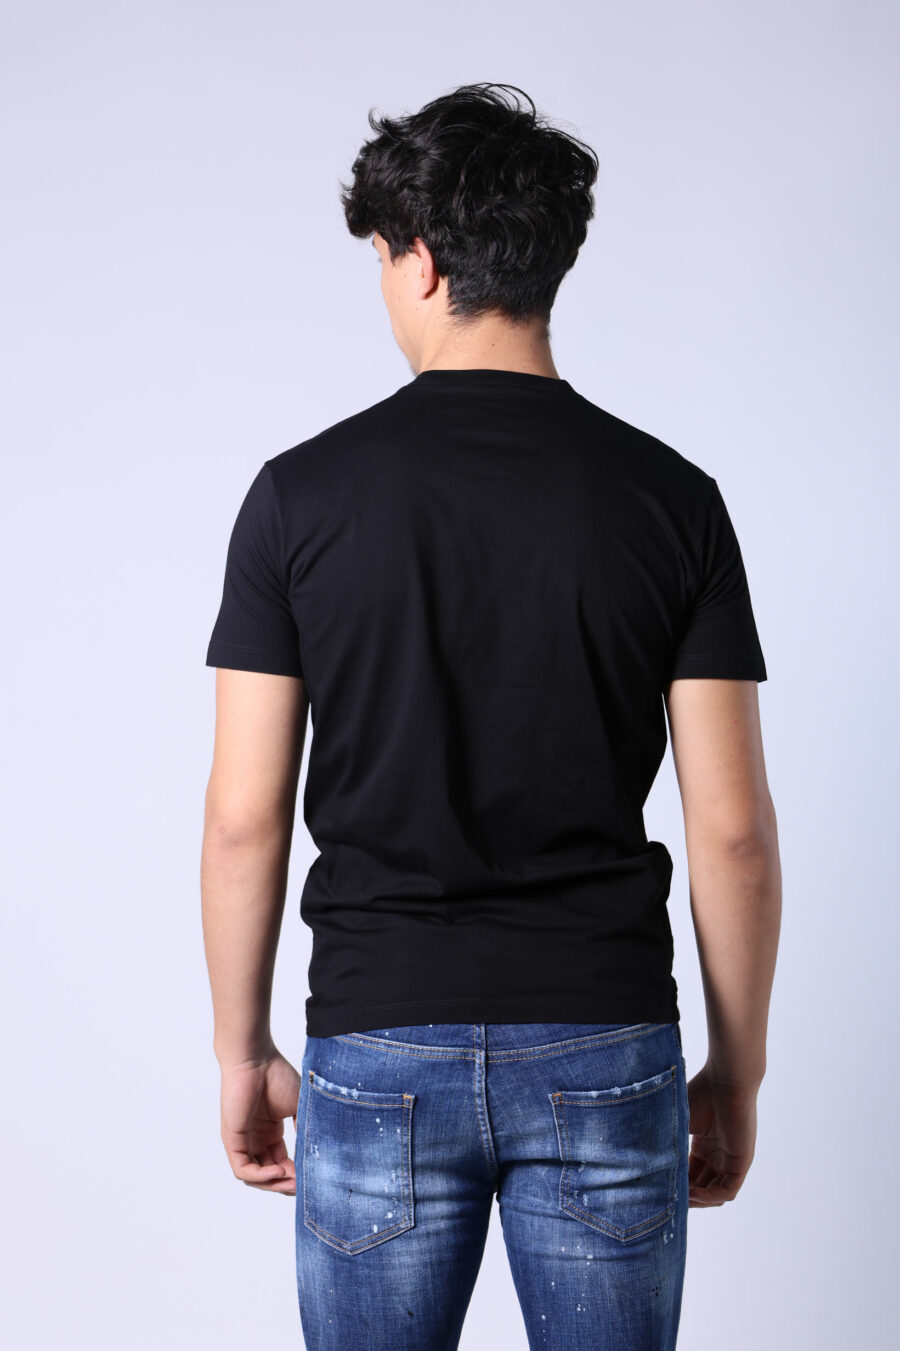 T-shirt preta com maxilogo "icon pixeled" turquesa e fúcsia - Untitled Catalog 05300